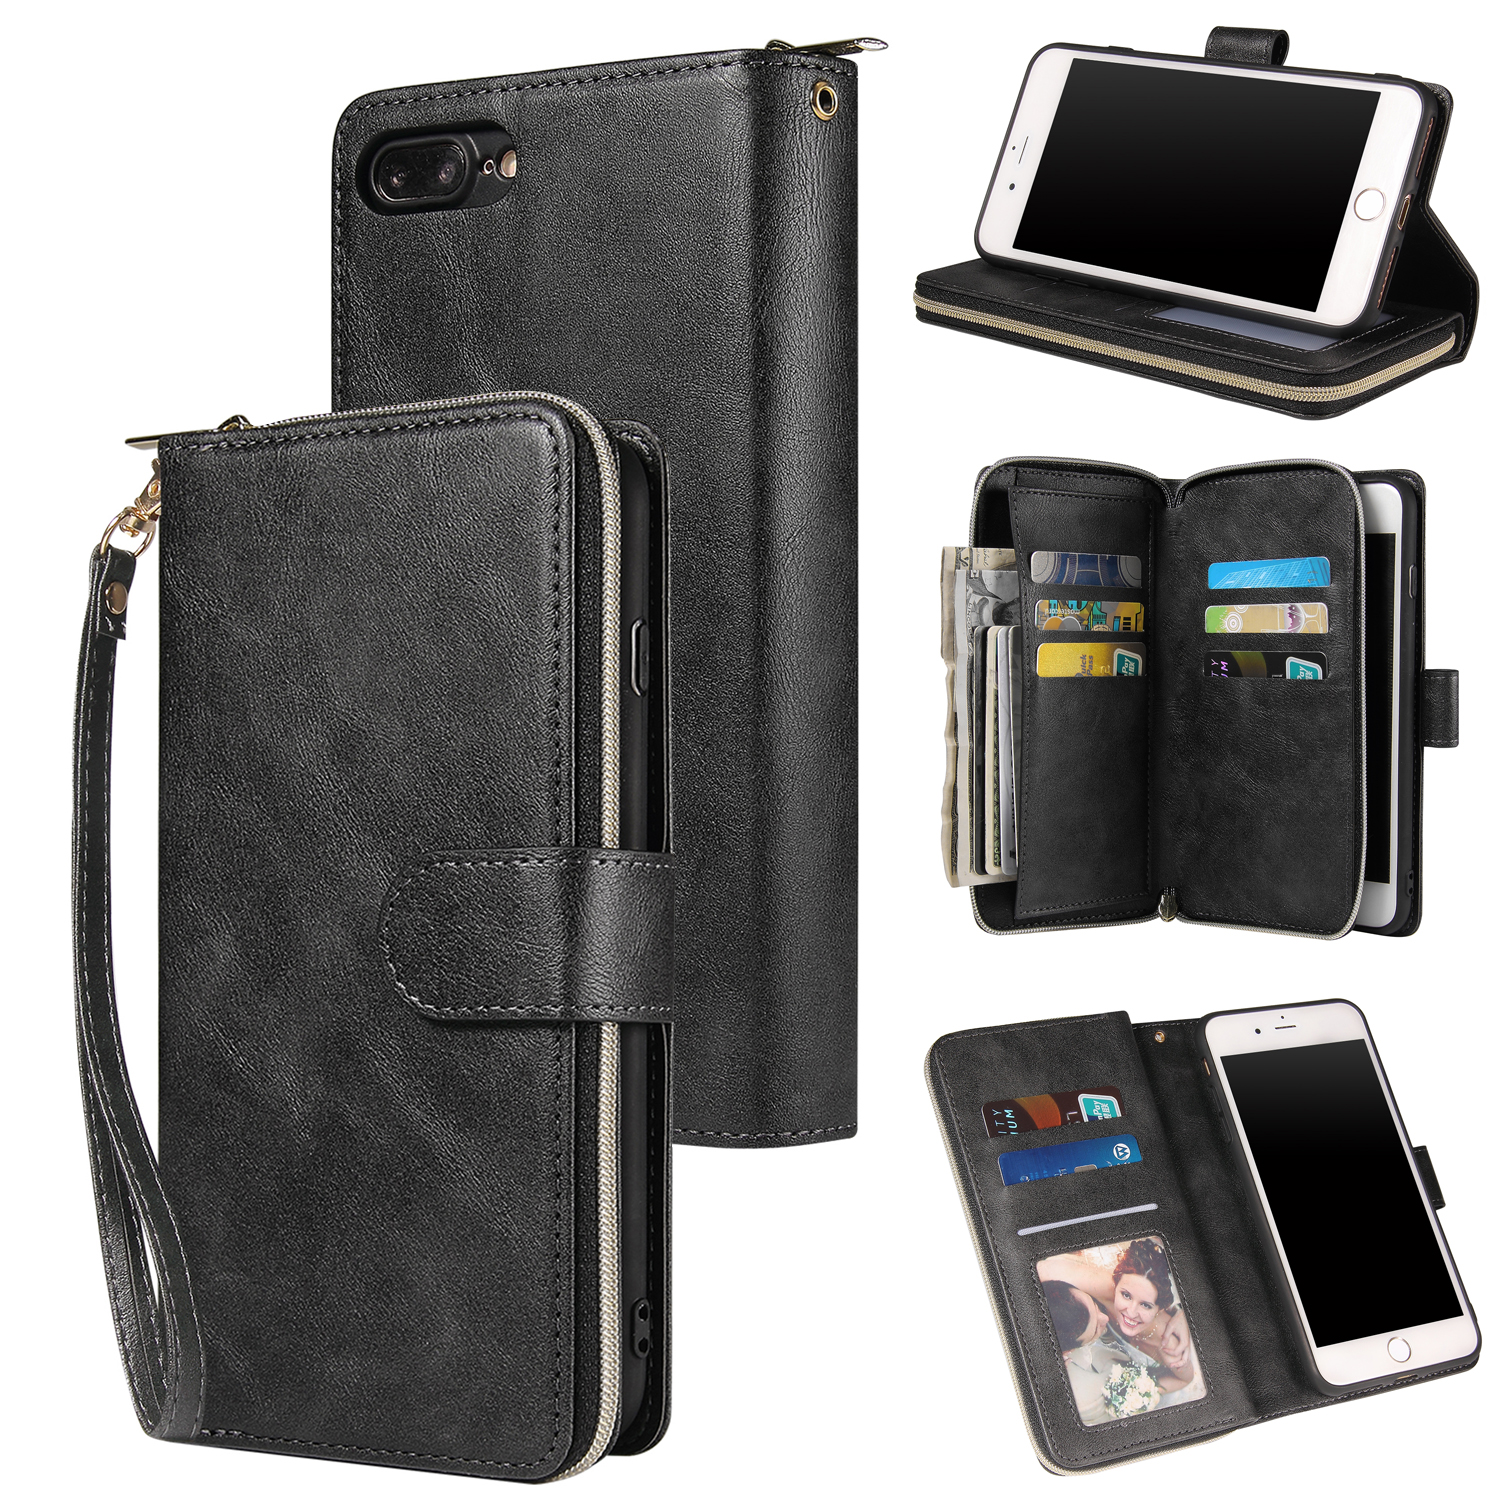 For Iphone 6/6s/6 Plus/6s Plus/7 Plus/8 Plus Pu Leather  Mobile Phone Cover Zipper Card Bag + Wrist Strap black